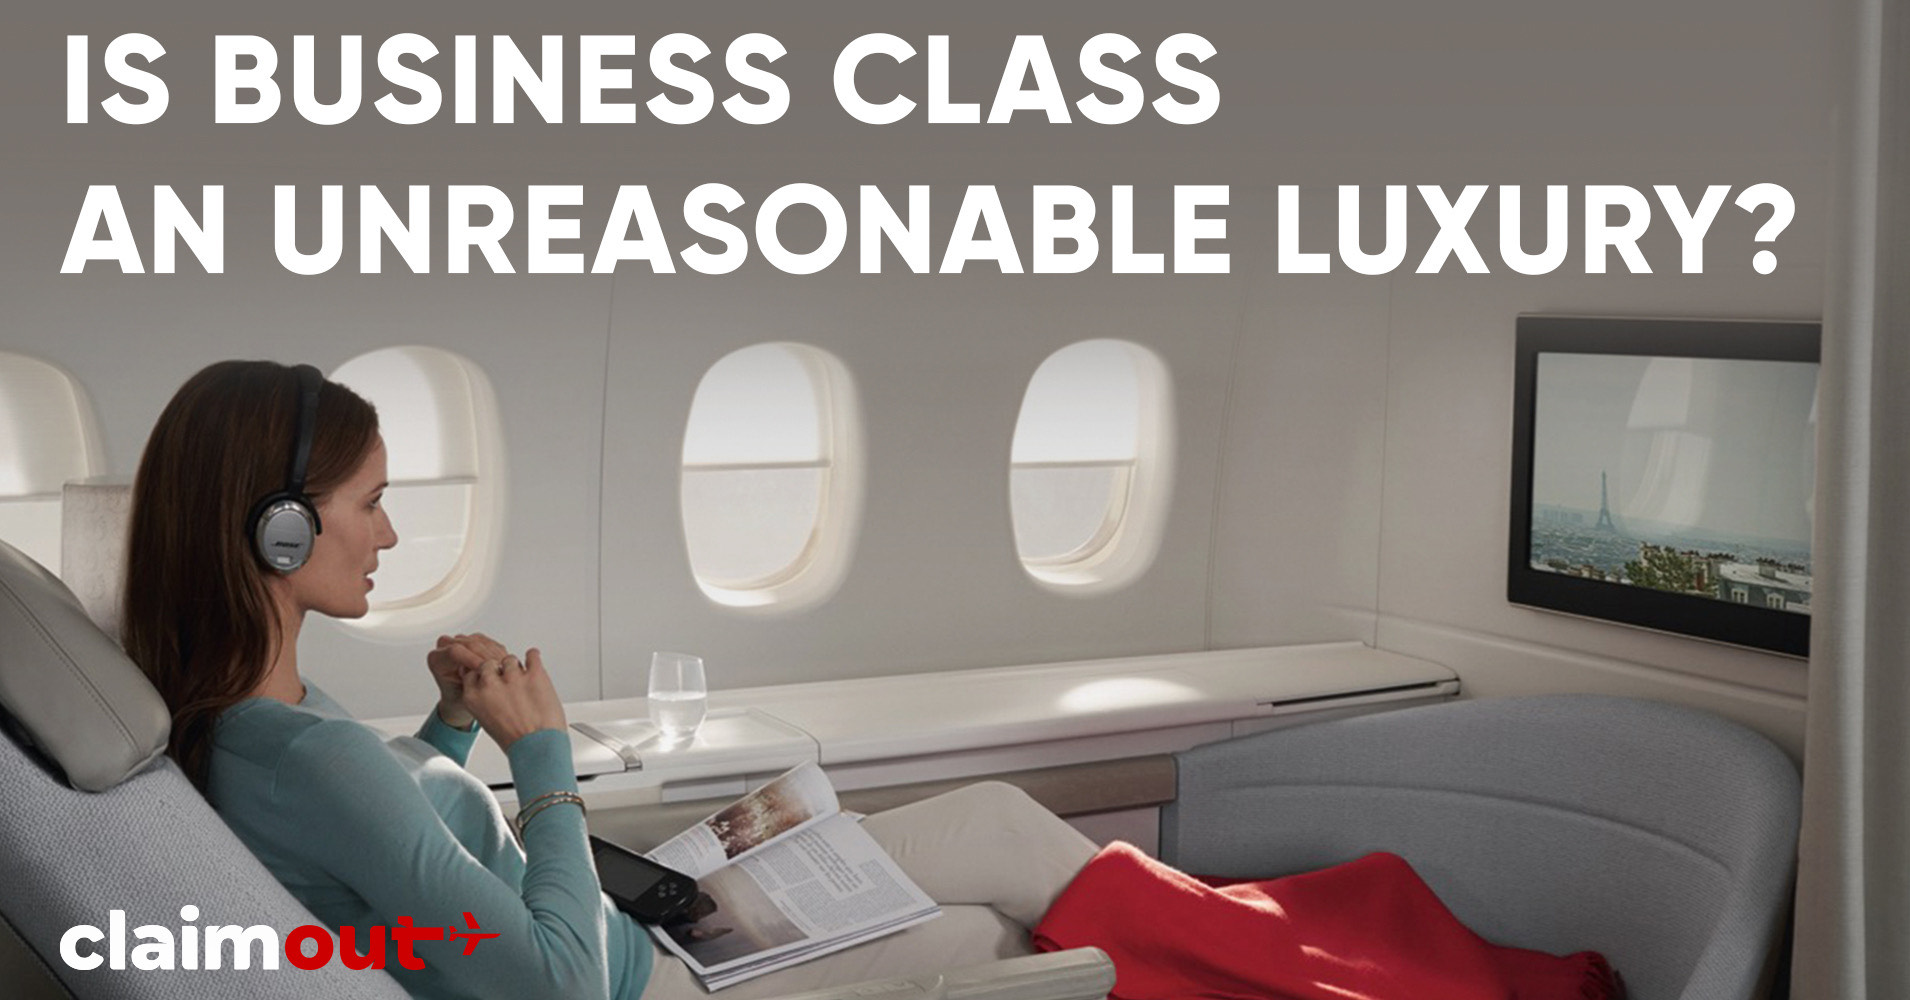 Is business class an unreasonable luxury?